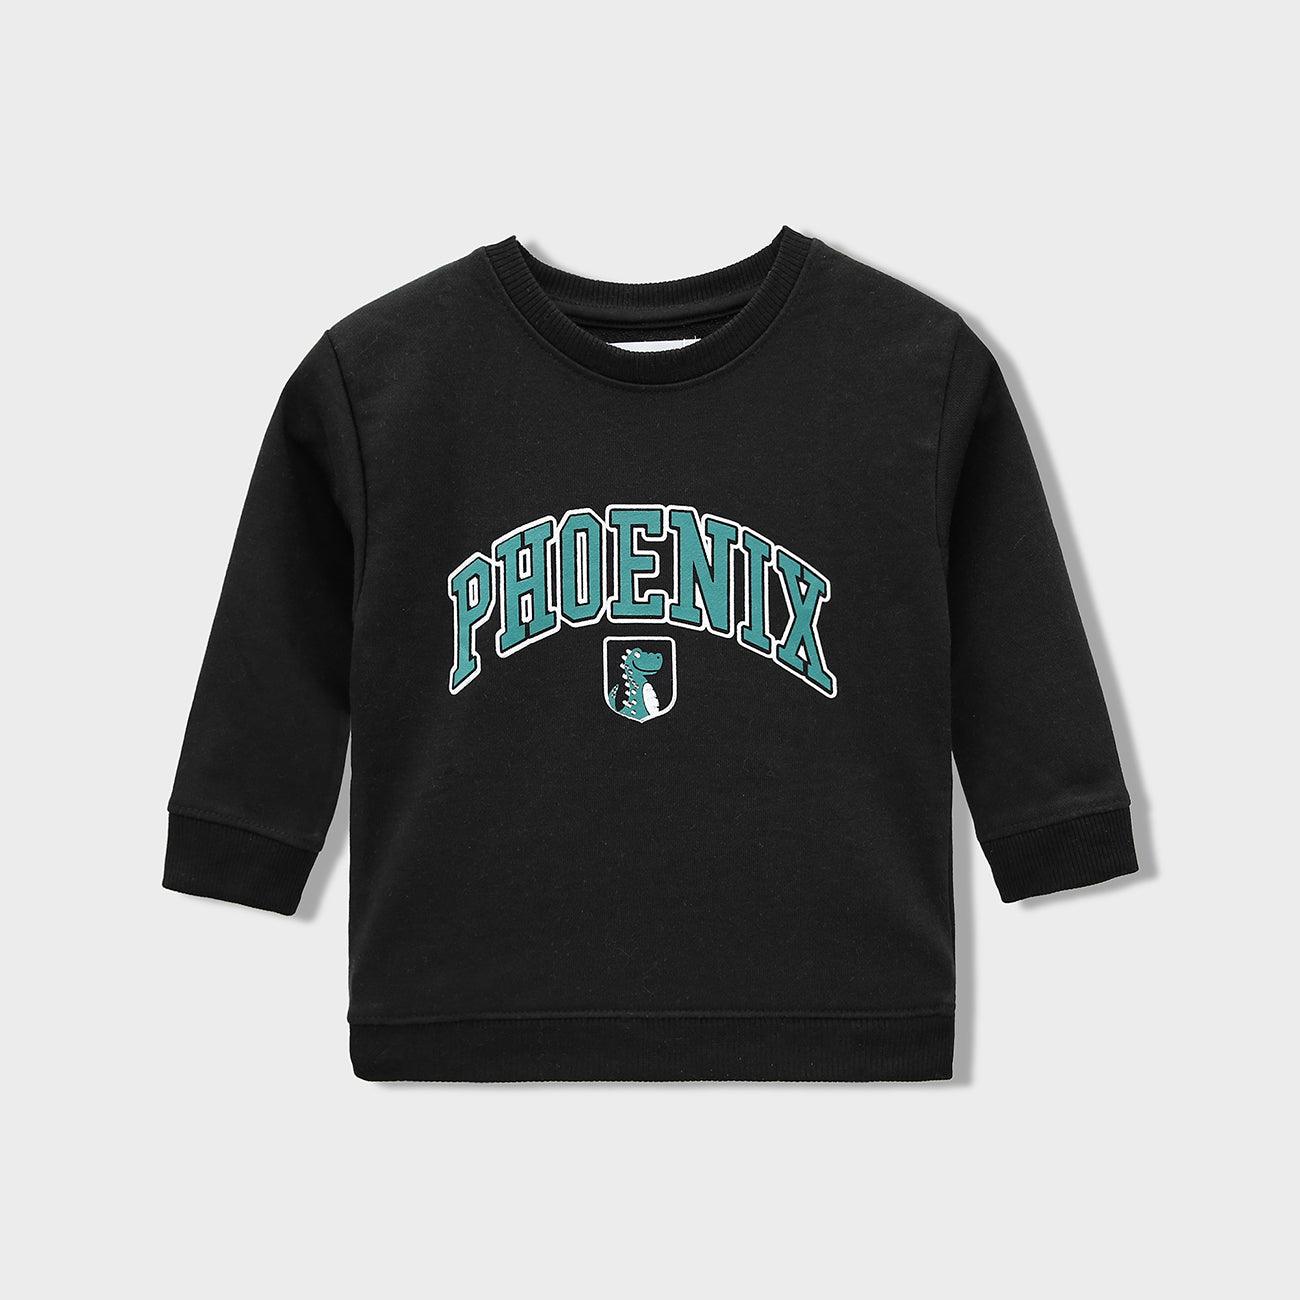 Premium Quality Graphic Black Terry Sweatshirt For Kids (MN-120125) - Brands River